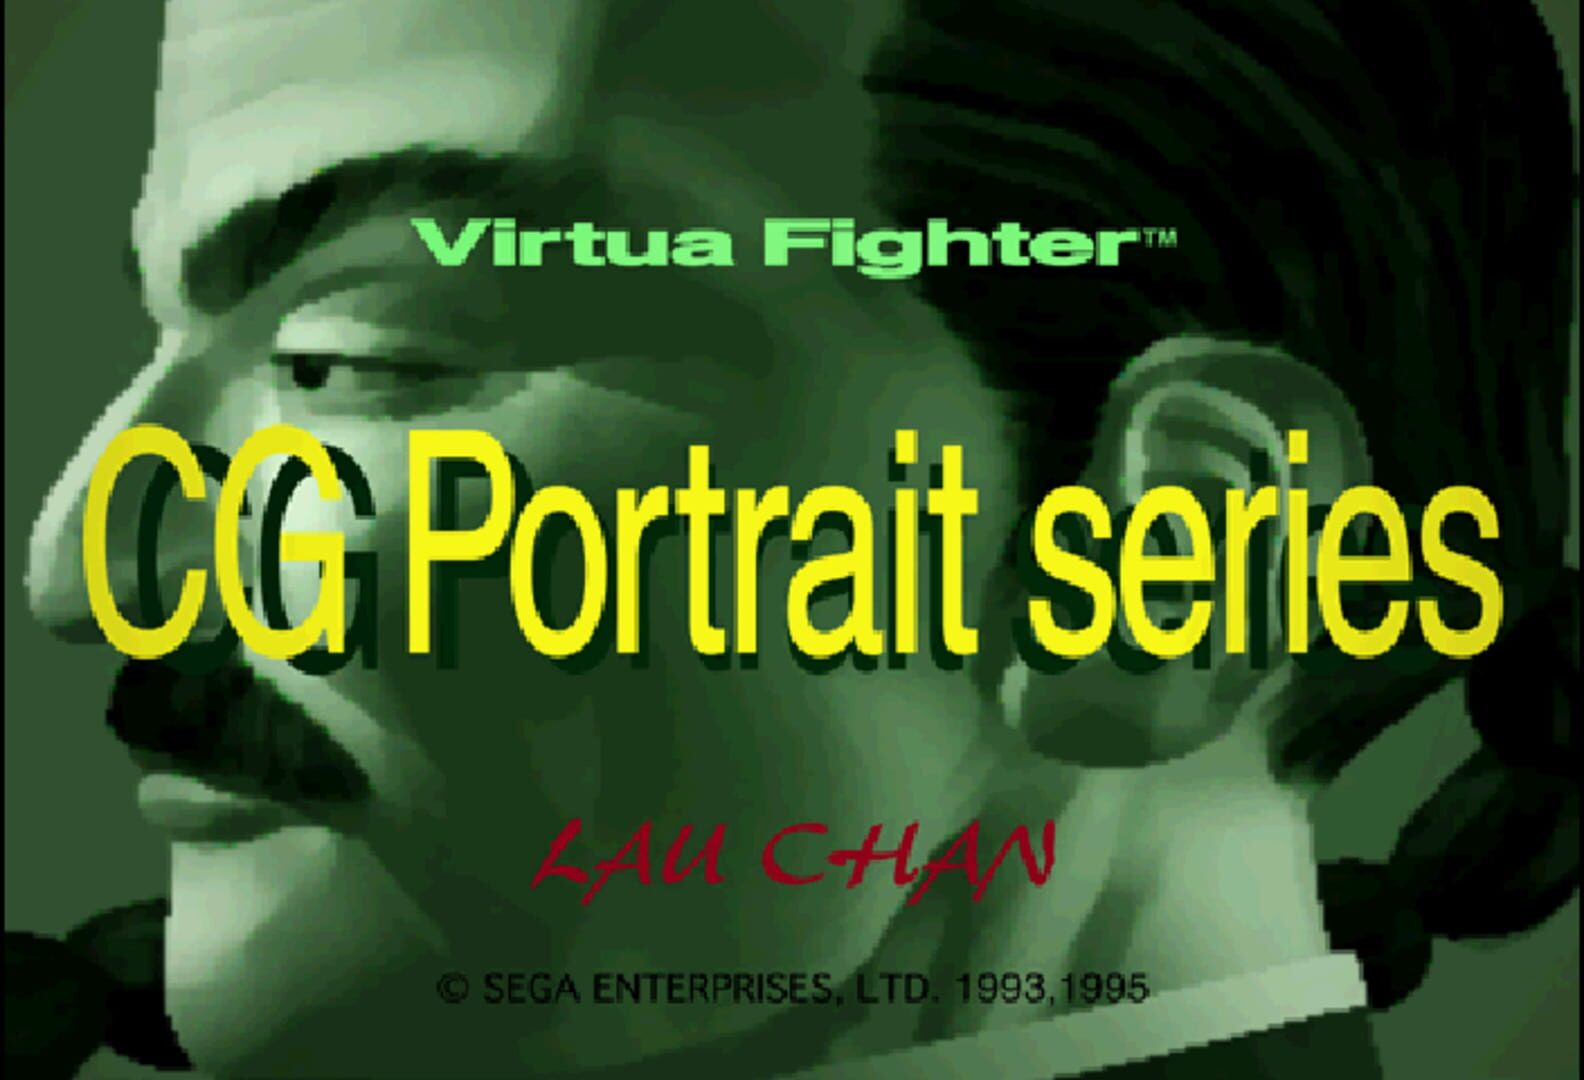 Captura de pantalla - Virtua Fighter CG Portrait Series Vol.6: Lau Chan